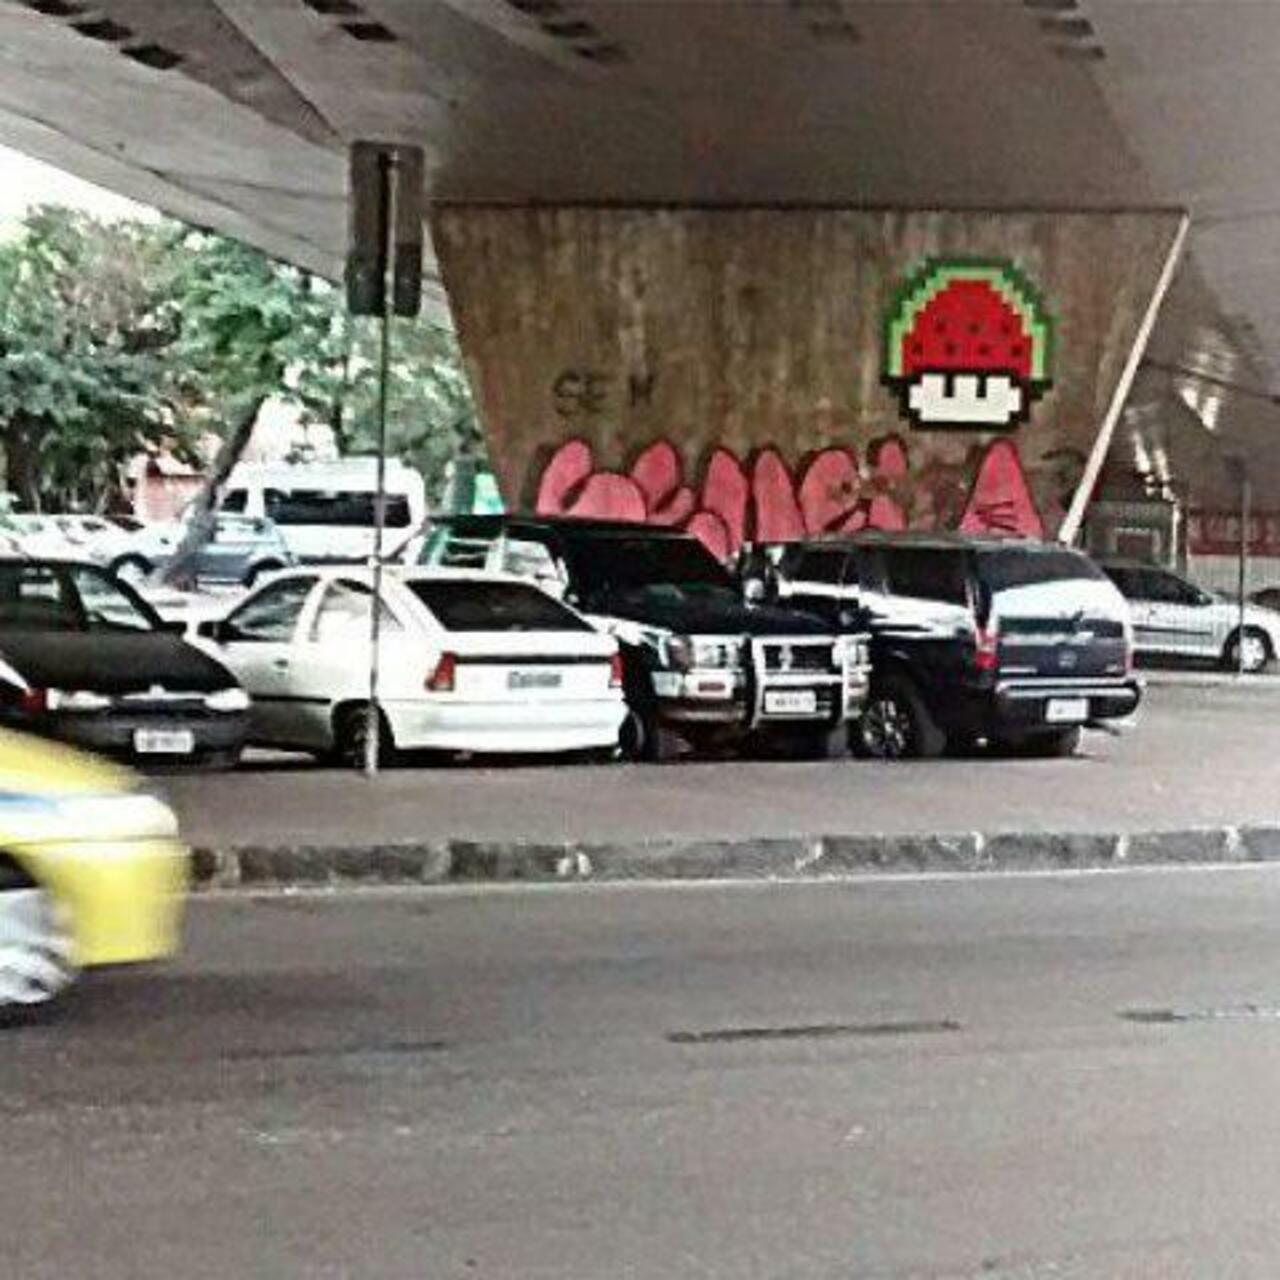 Um clique de @edsartori #bomb #vandal #streetartrio #streetart #graffiti #welovebombing #ilovebomb by remelastreeta… http://t.co/gF6ZWwfW2v